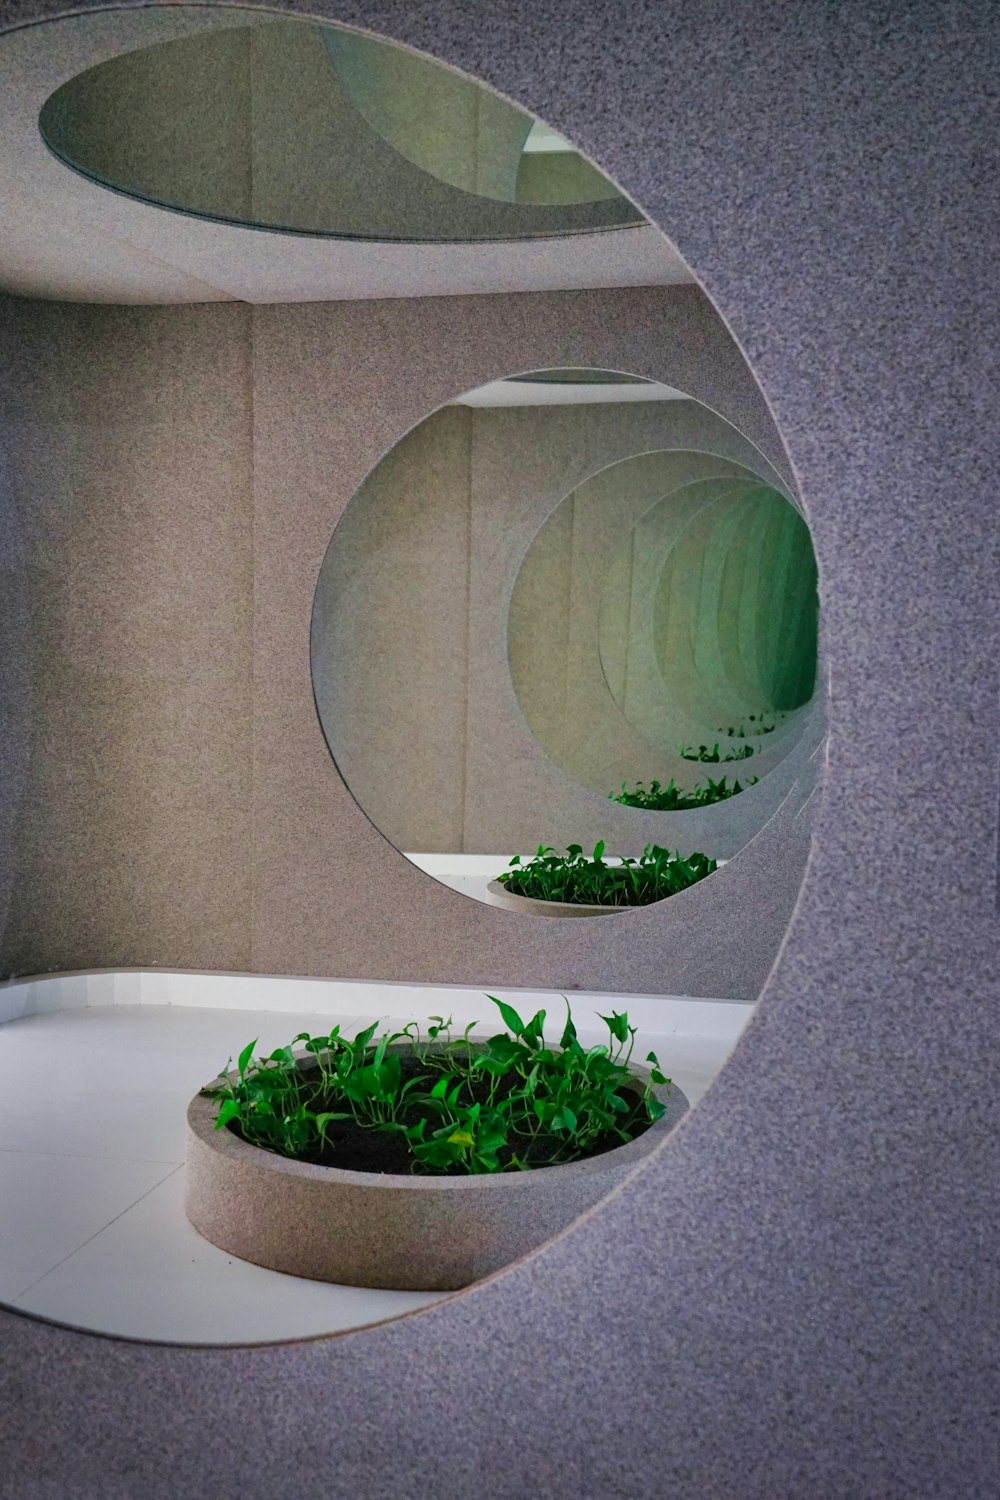 a circular mirror reflecting a plant in a bowl